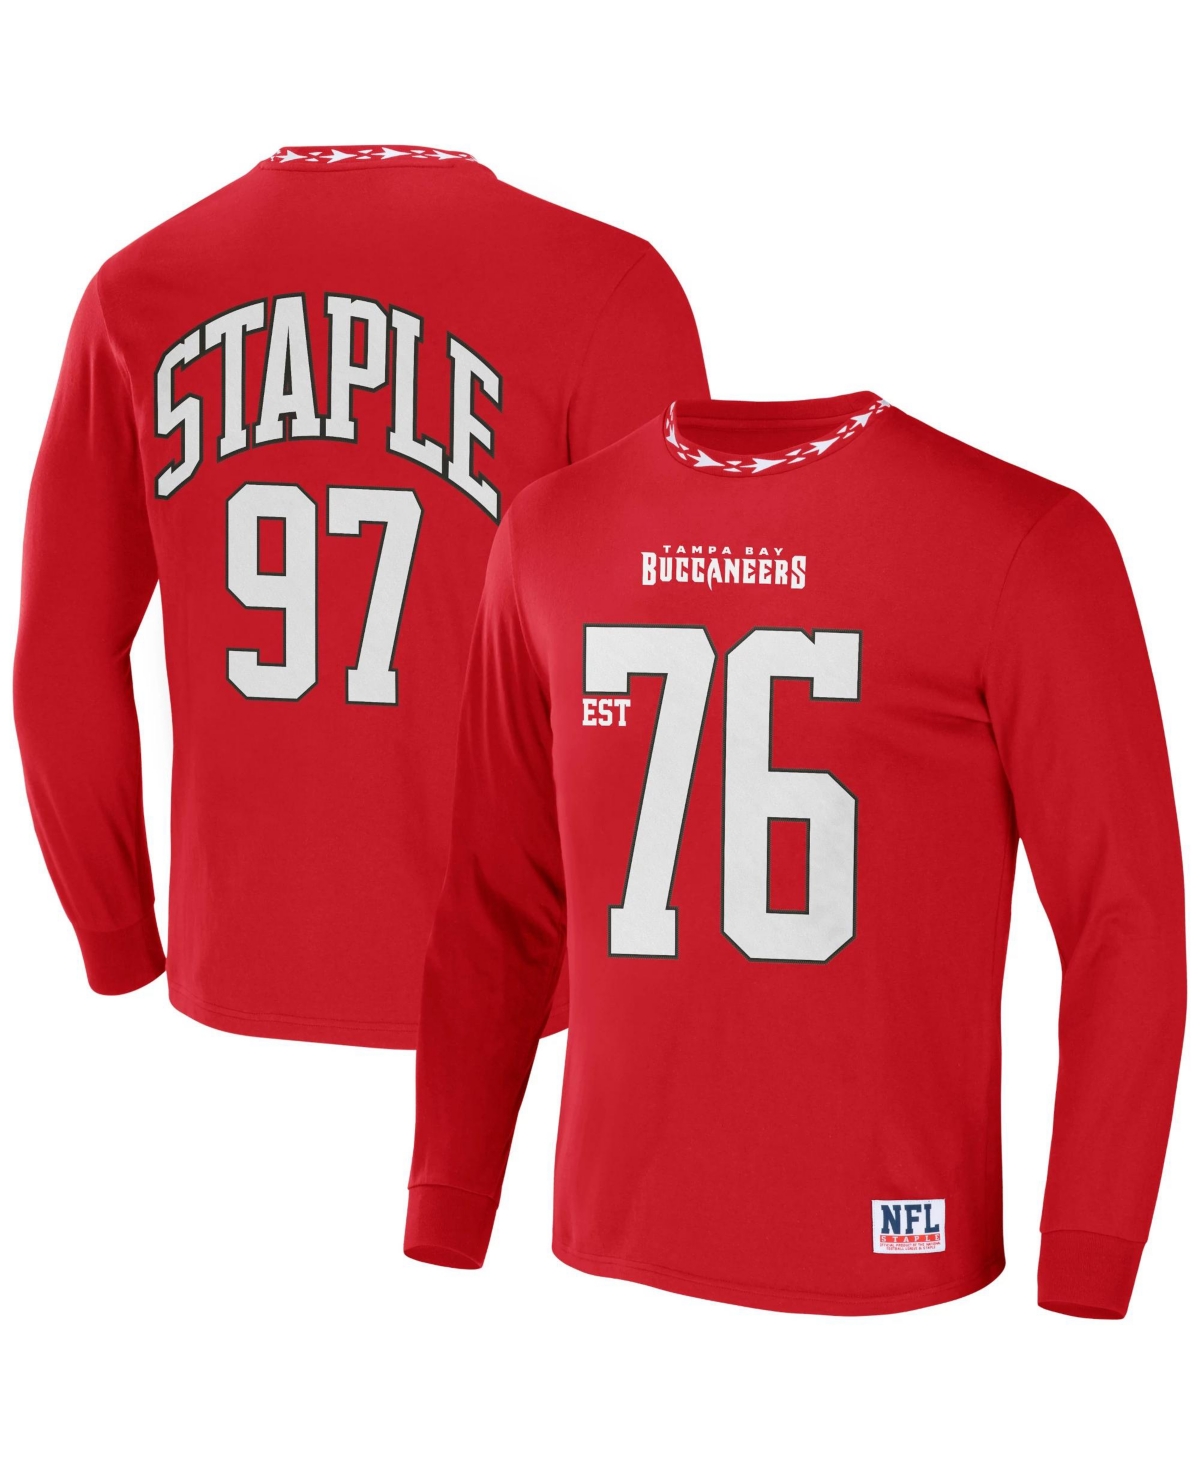 Nfl Properties Men's Nfl X Staple Red Tampa Bay Buccaneers Core Long Sleeve Jersey Style T-shirt